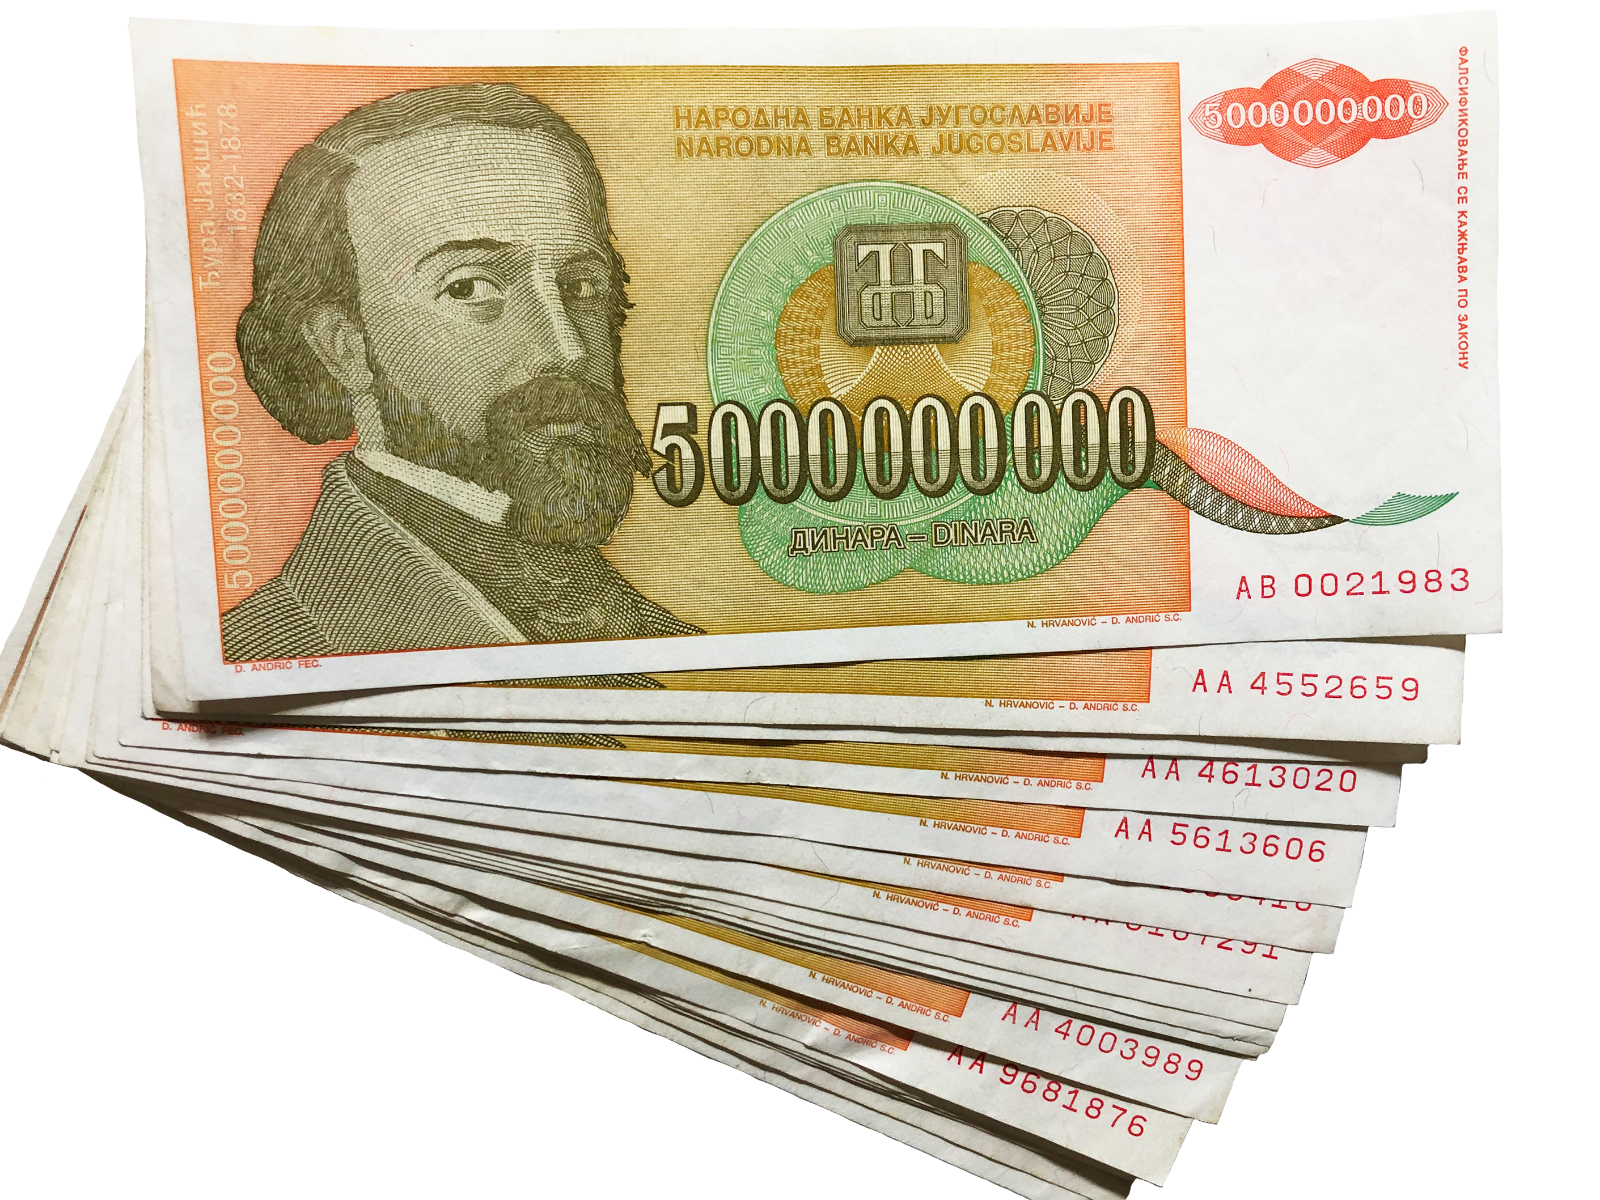 Yugoslavia 5 Billion Dinara 1993 Circulated Banknote Currency Money Cash Bill